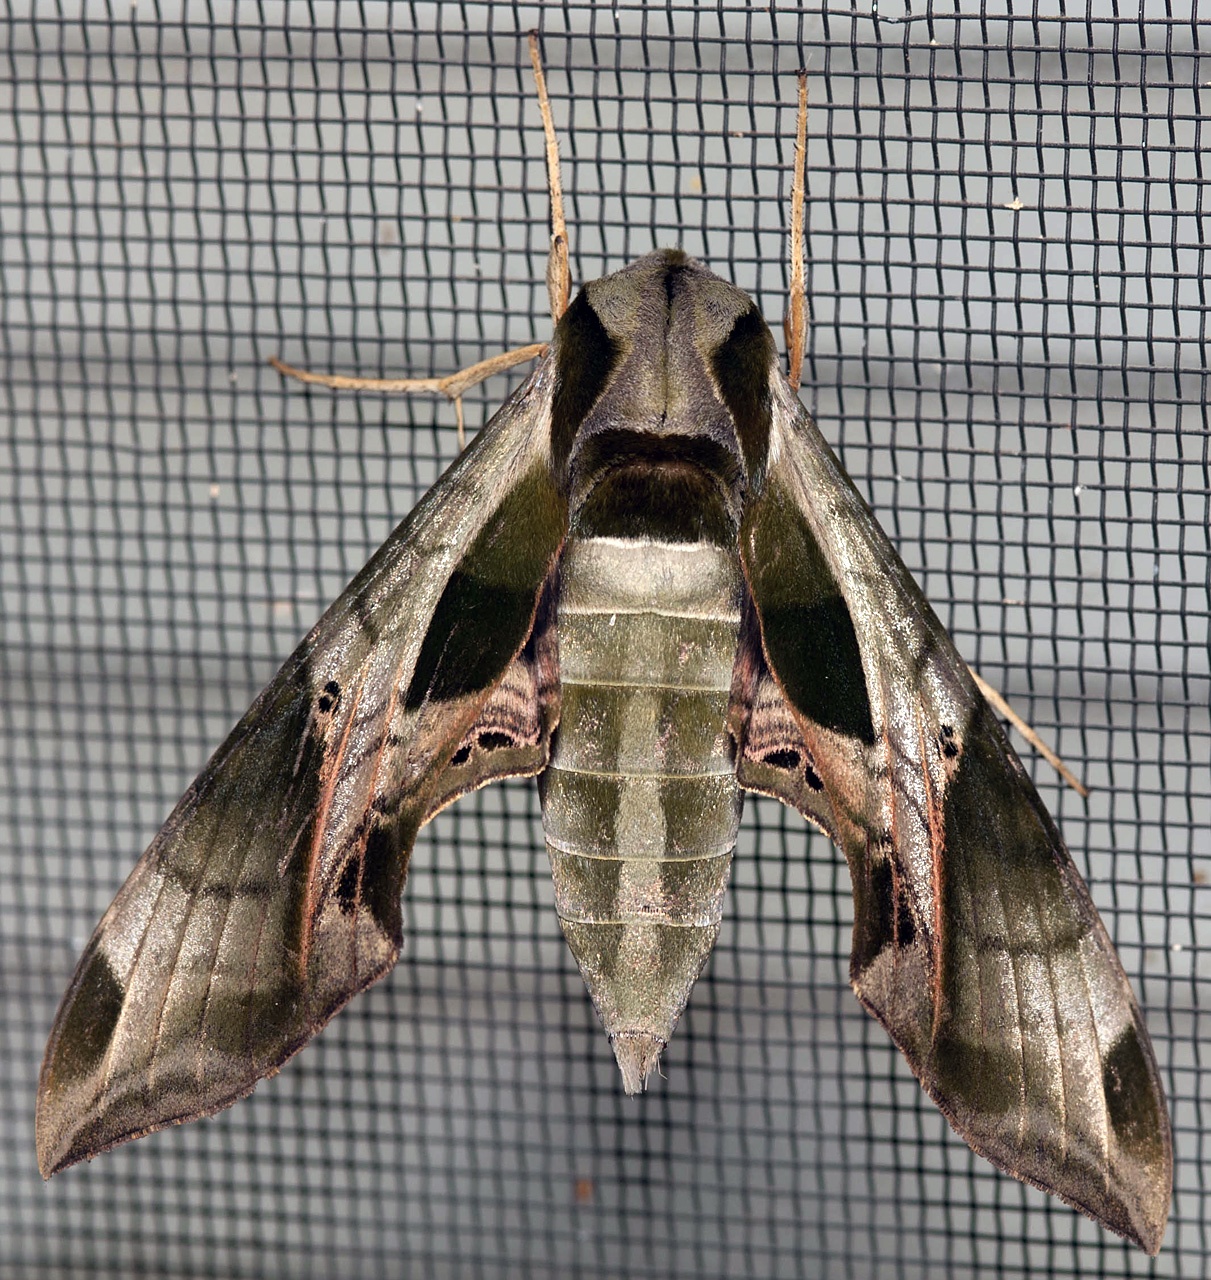 Moth Identification Chart